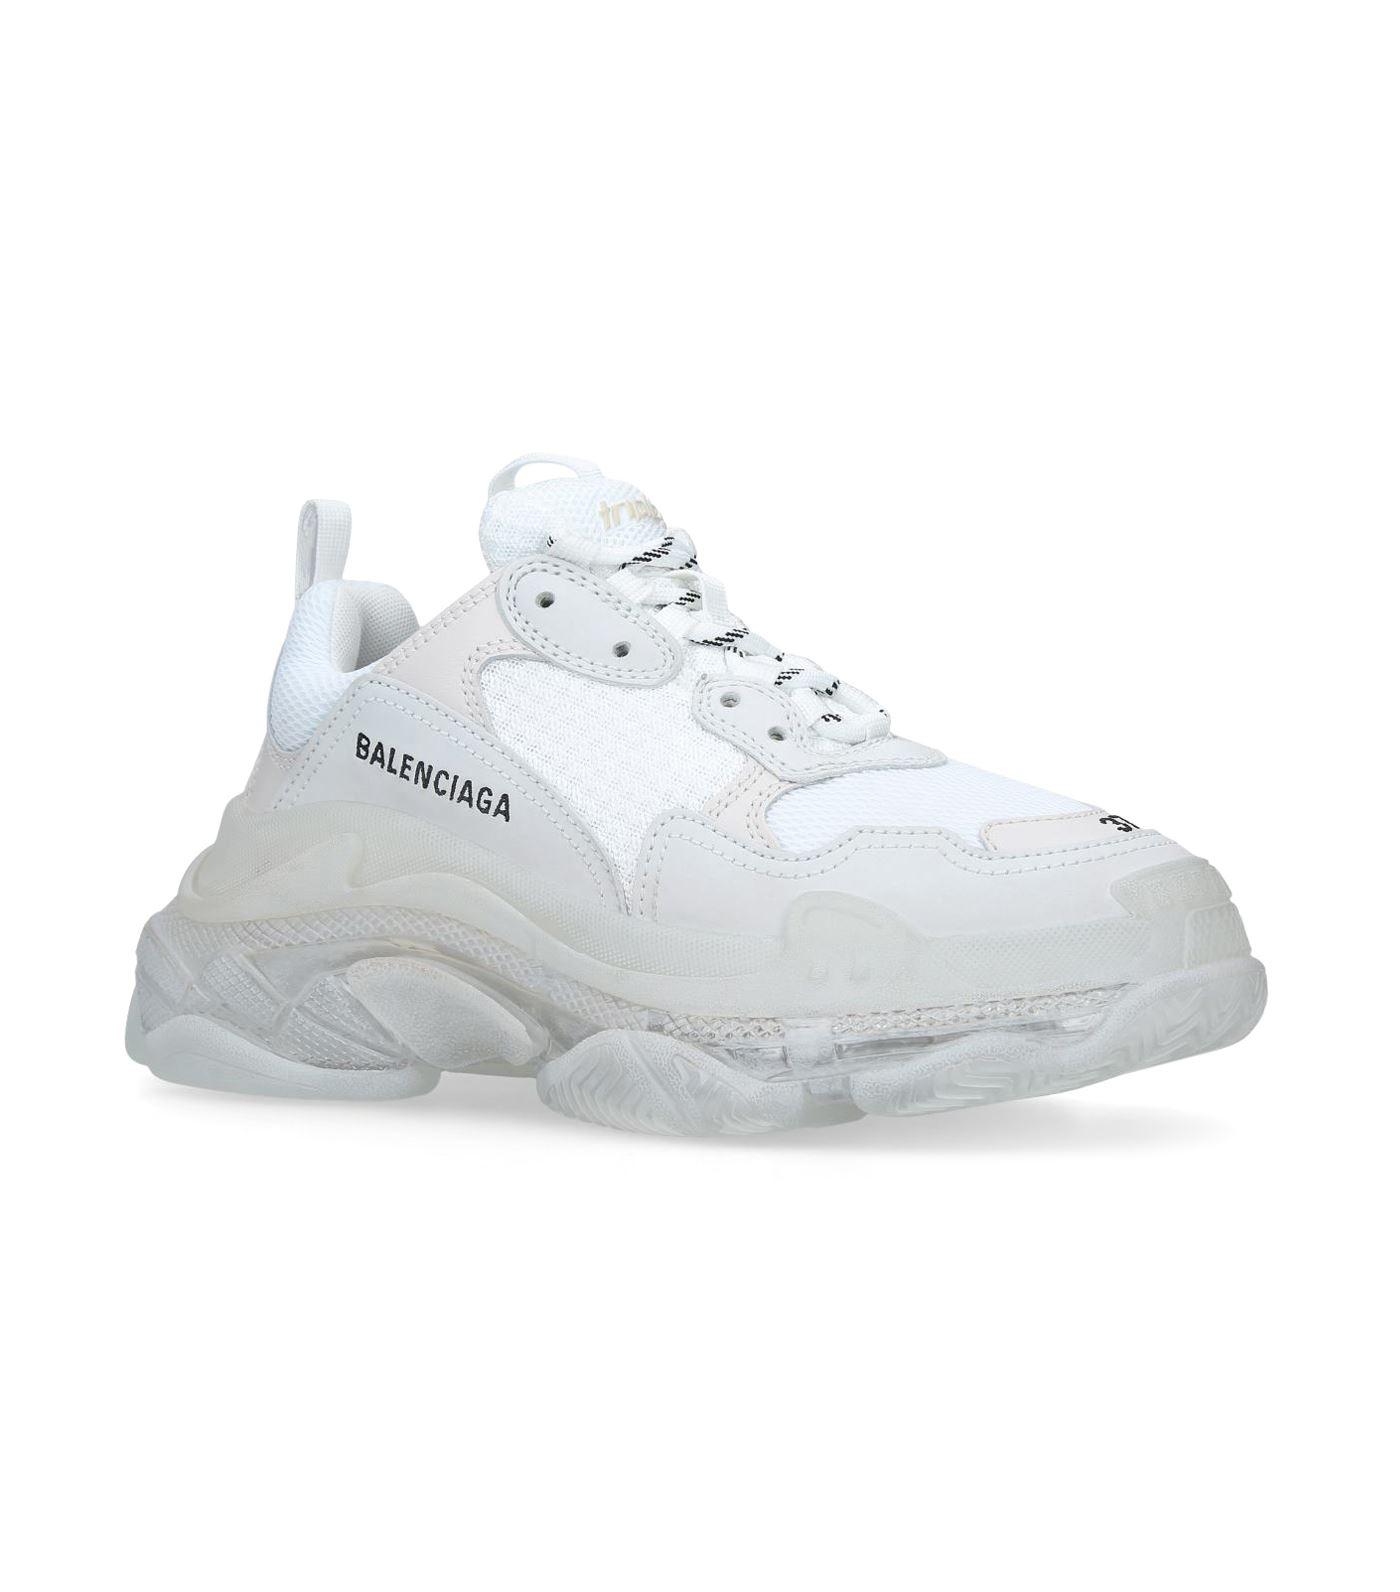 Balenciaga Triple S Clear Sneakers in White - Lyst